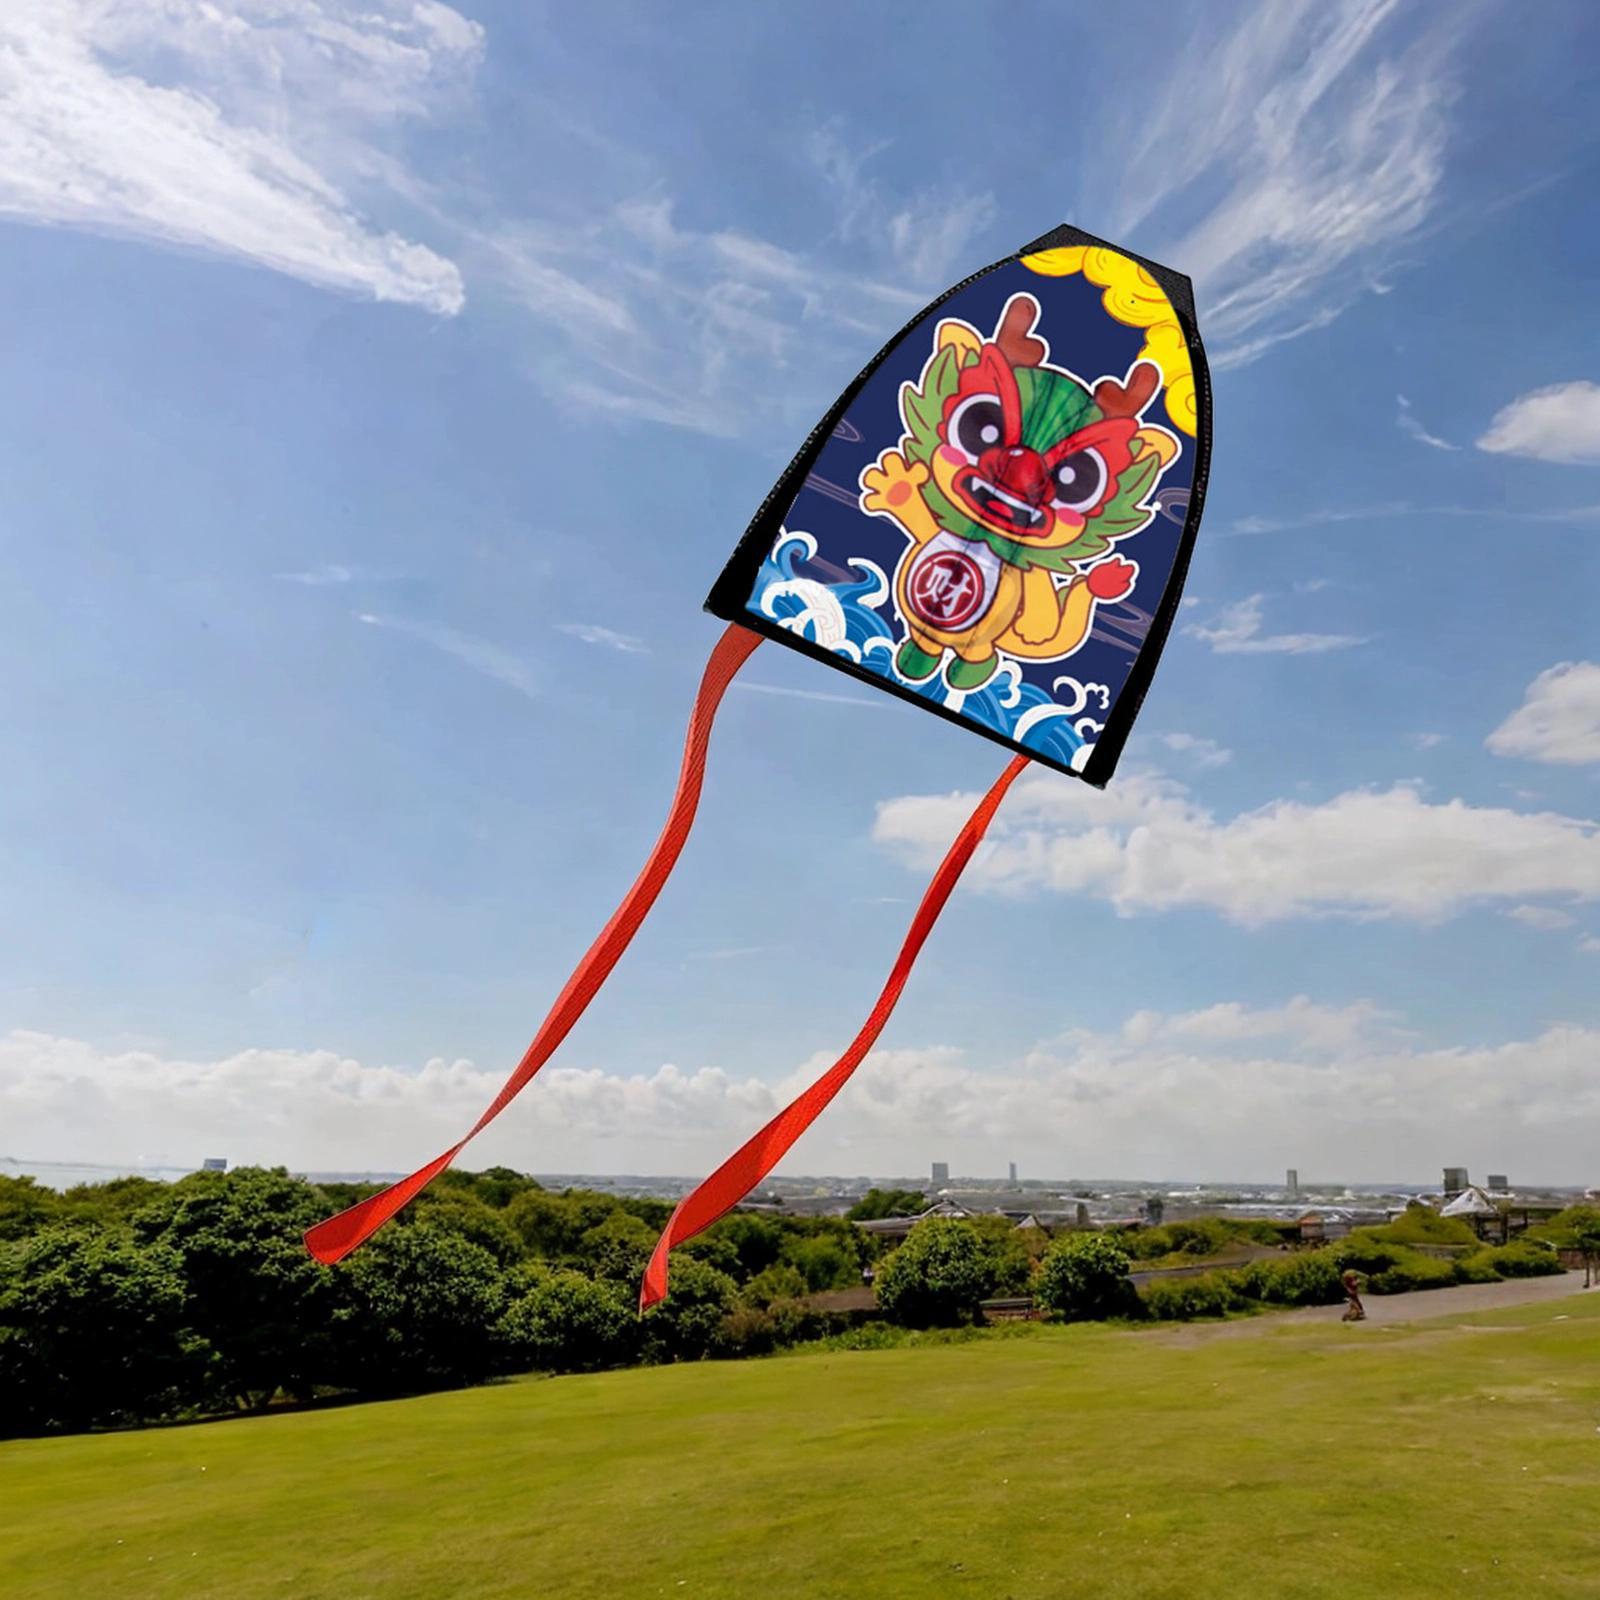 Thumb Ejection Kite Novelty Gift for Kids Teens Kid Toys Mini Kite